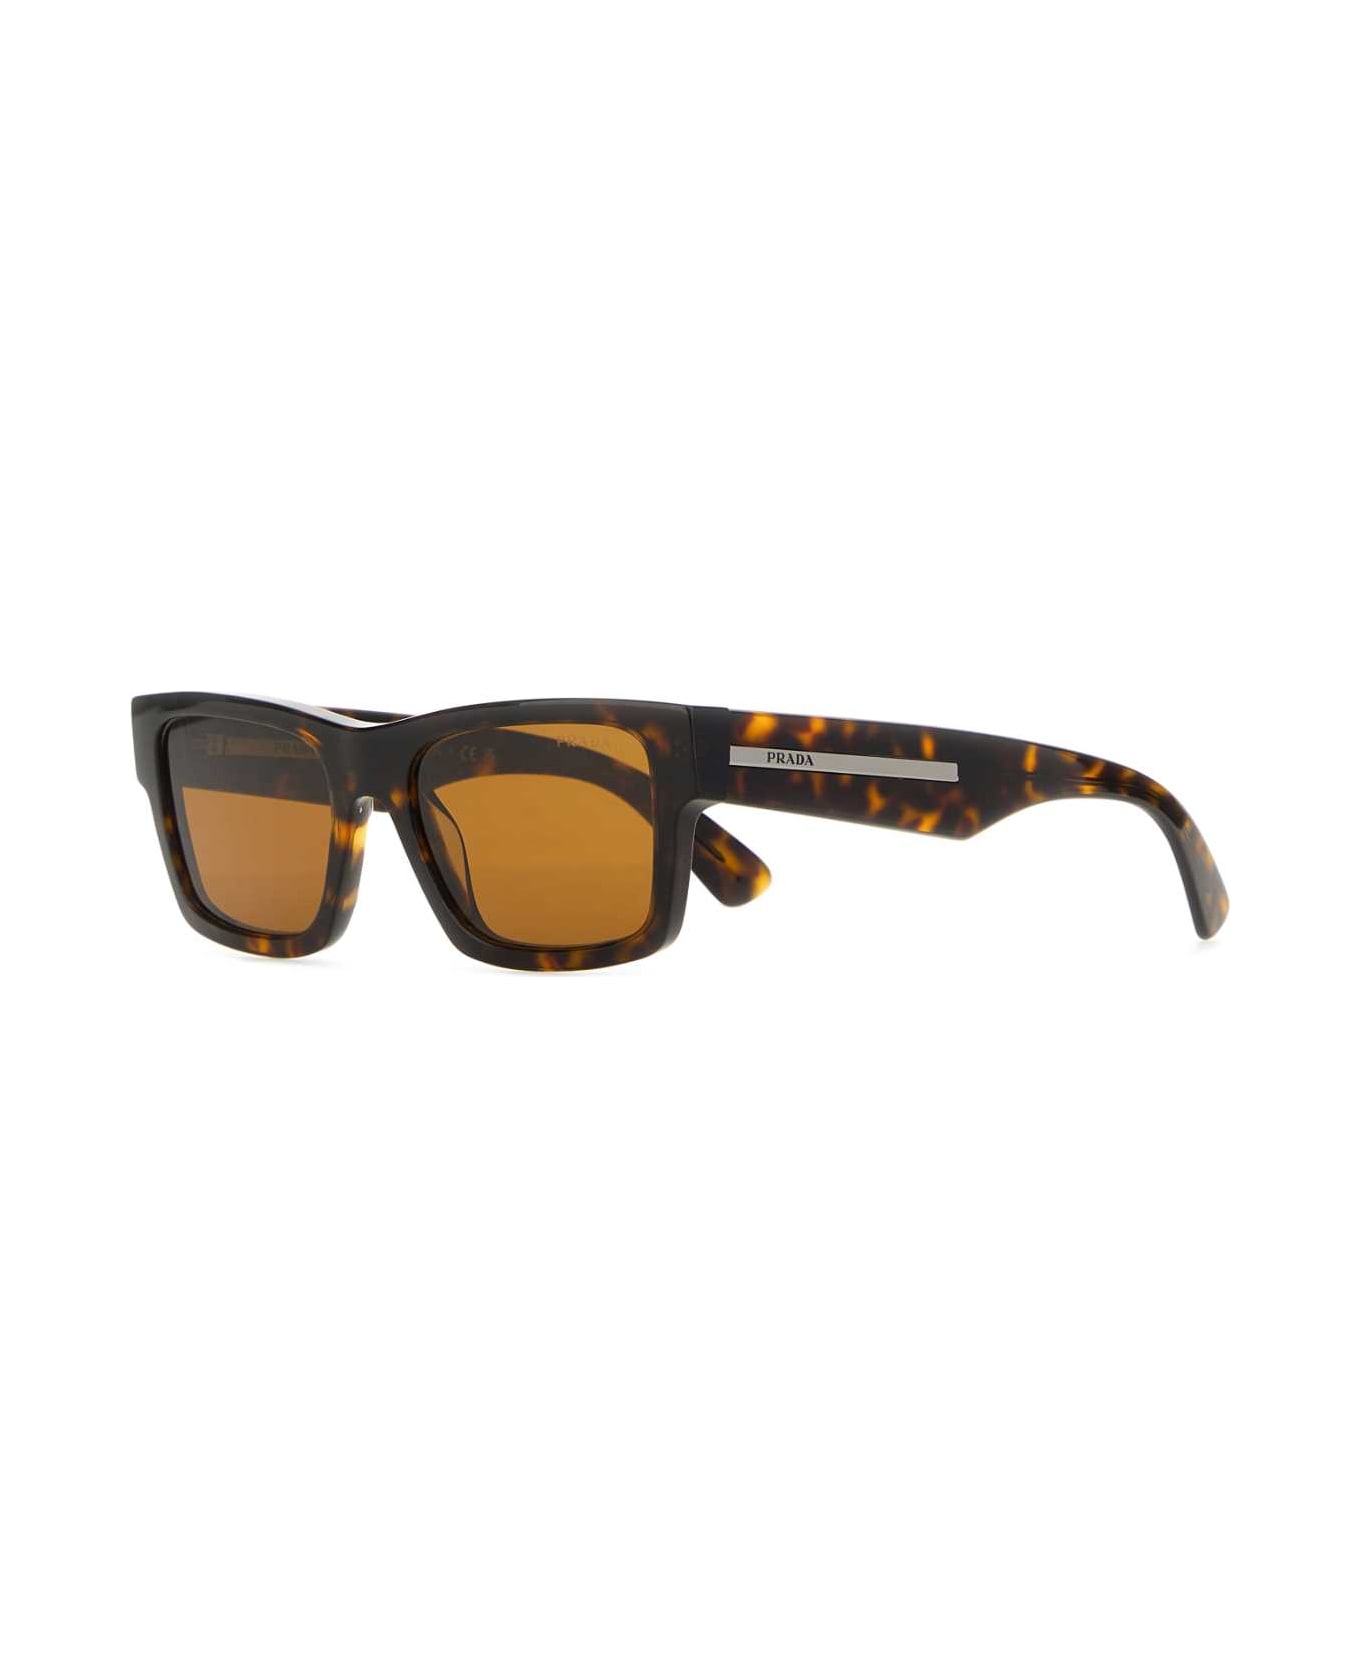 Prada Multicolor Acetate Sunglasses - LENSESCRISTALLO サングラス